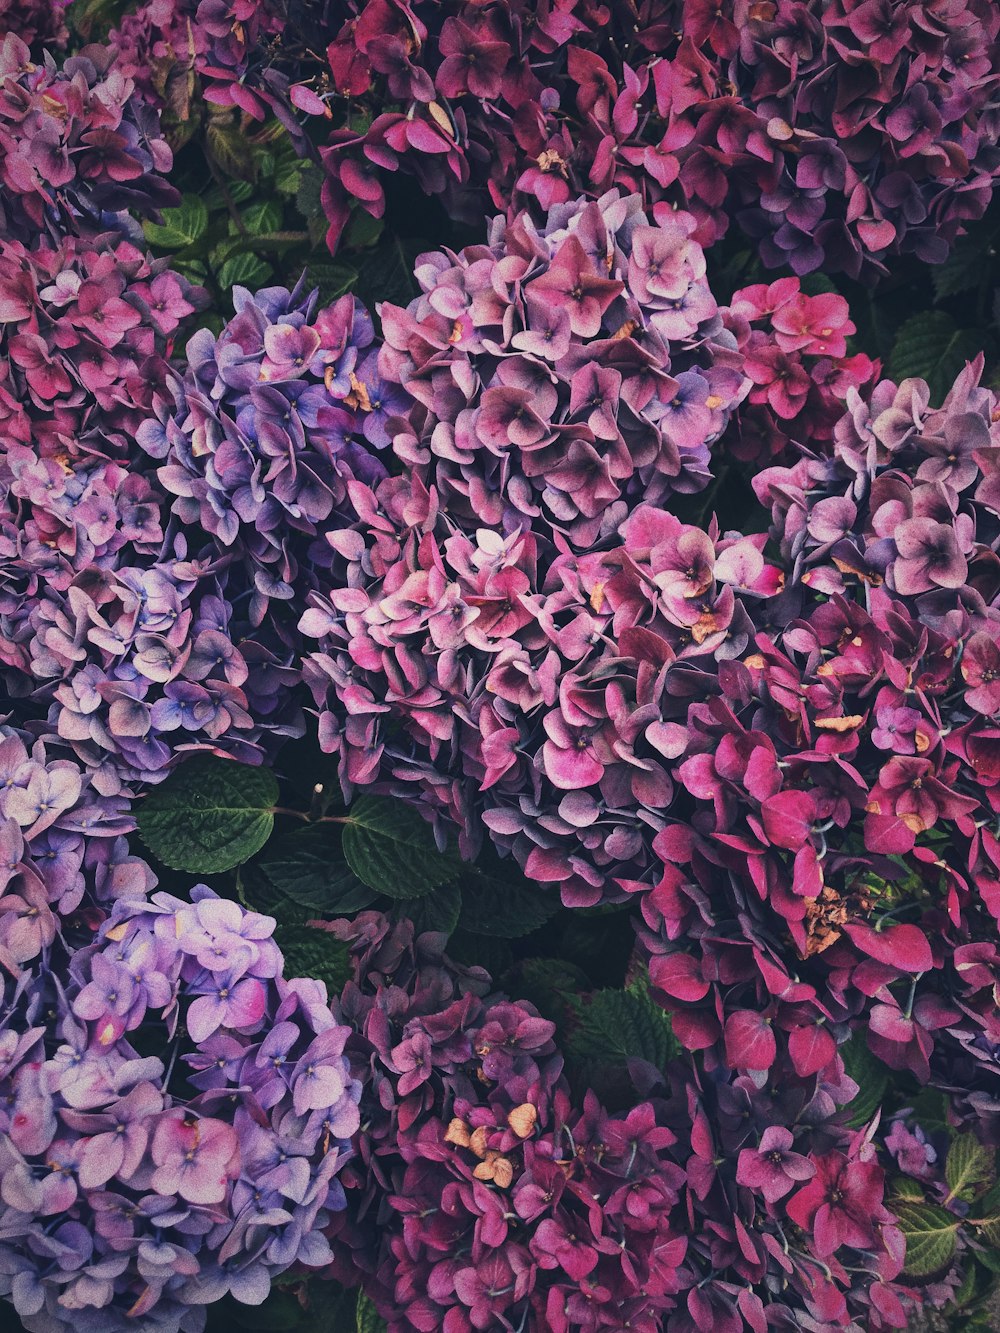 pink and purple hydrangeas flowers